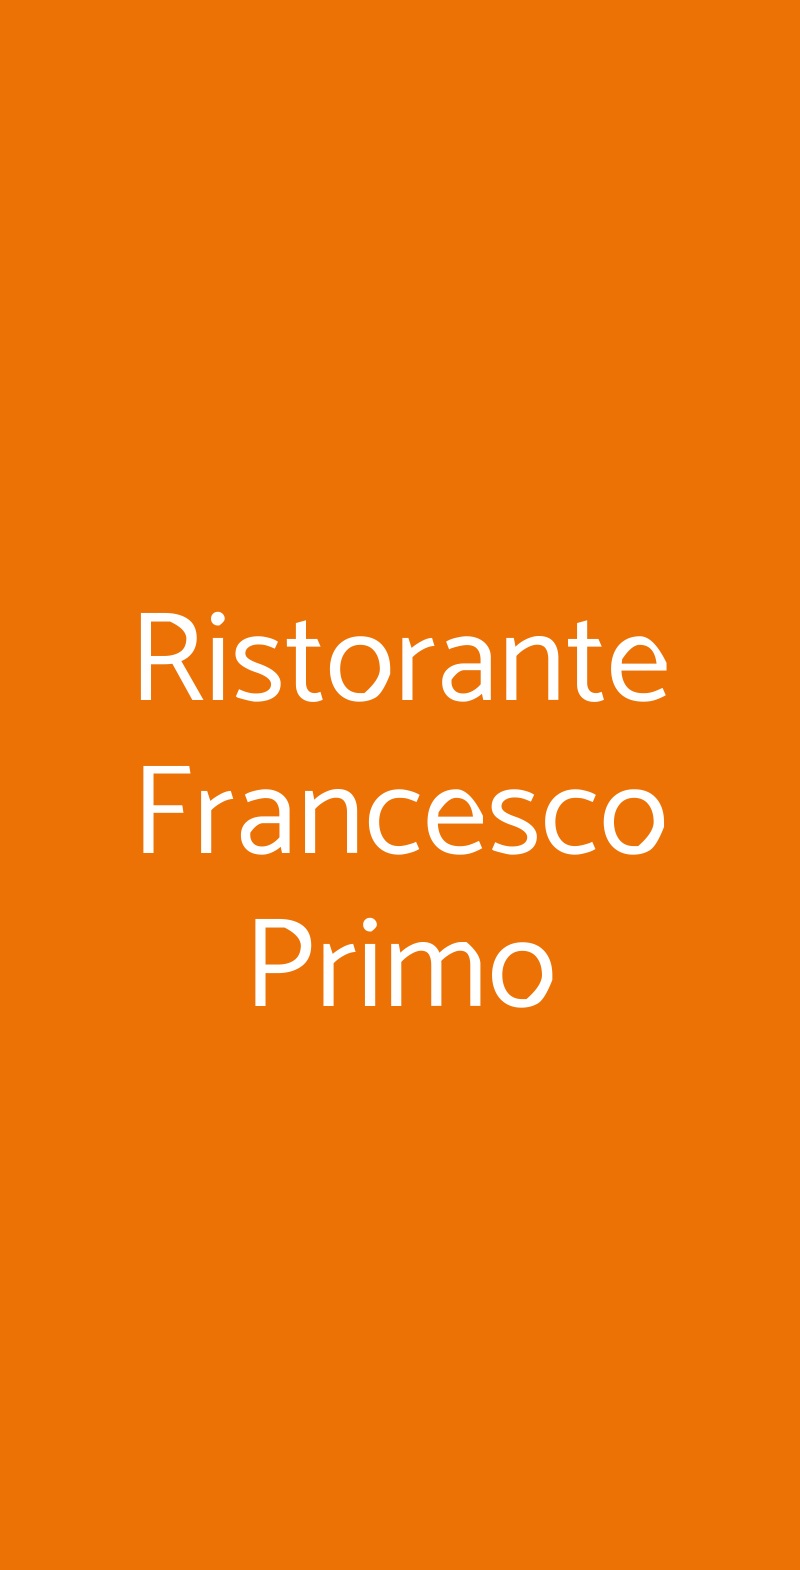 Ristorante Francesco Primo Roma menù 1 pagina